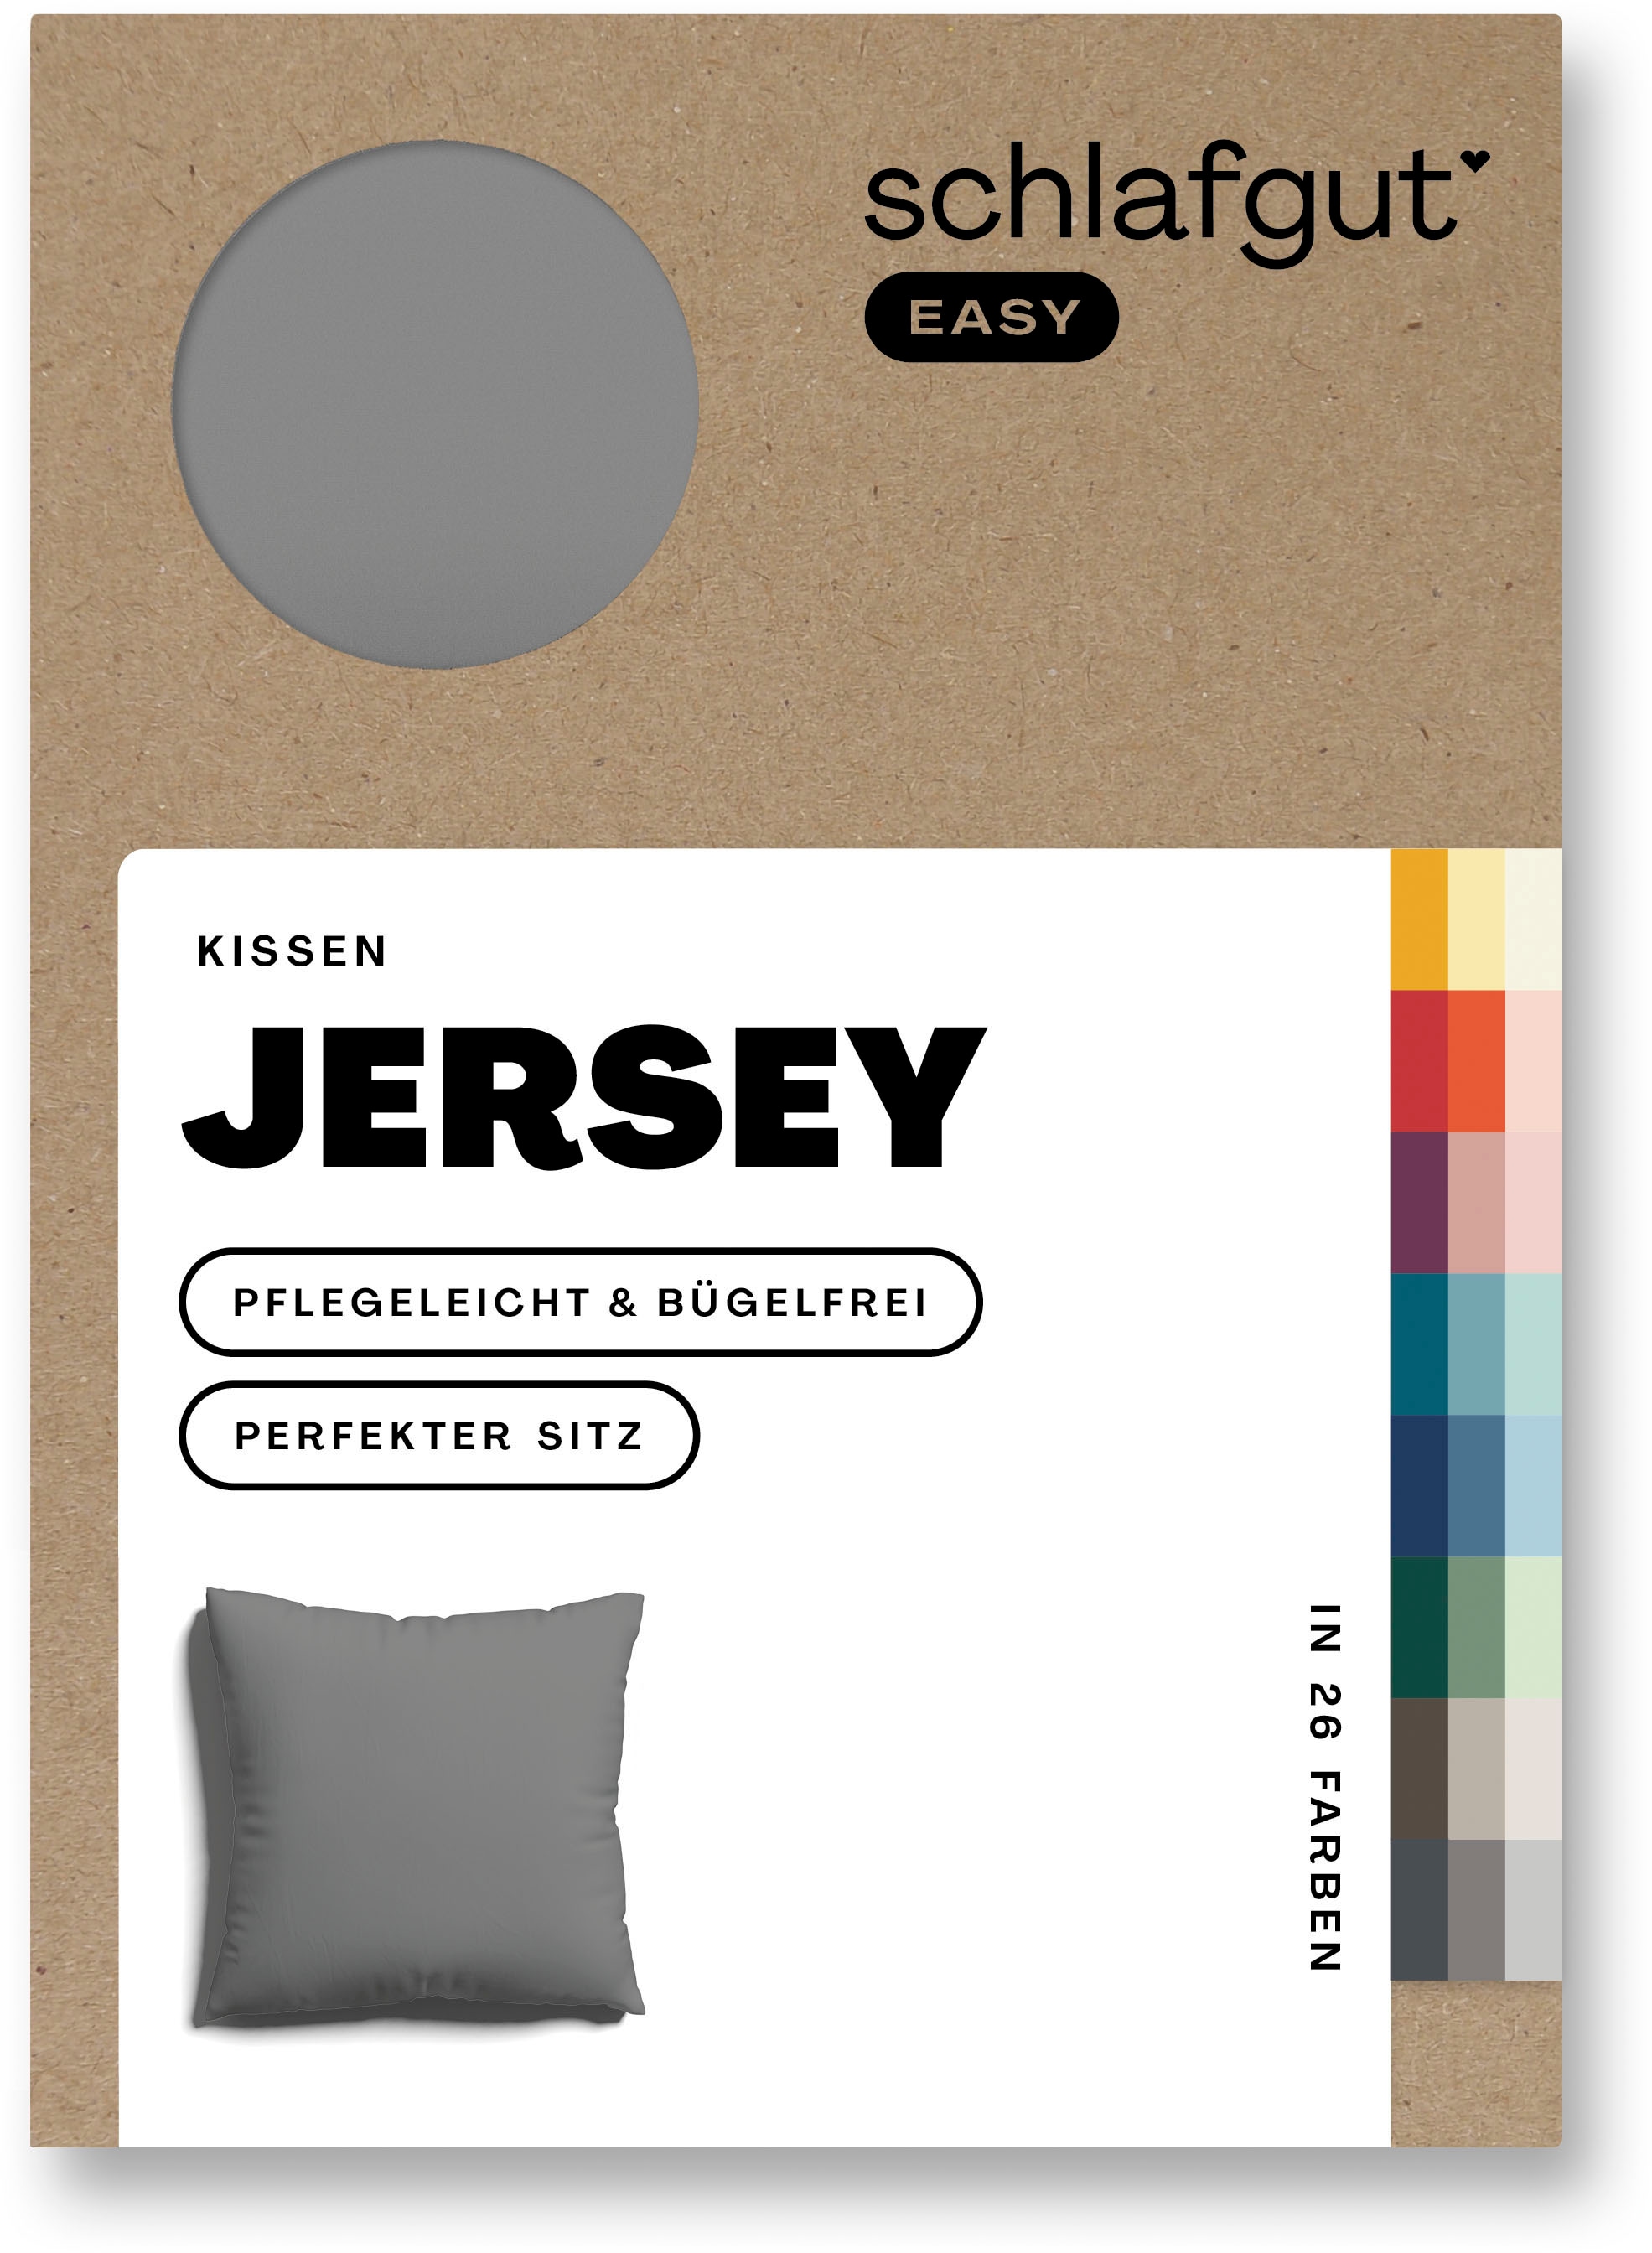 Schlafgut Kissenbezug »EASY Jersey«, (1 St.), Kissenhülle mit Reissverschluss, weich und saugfähig, Kissenbezug